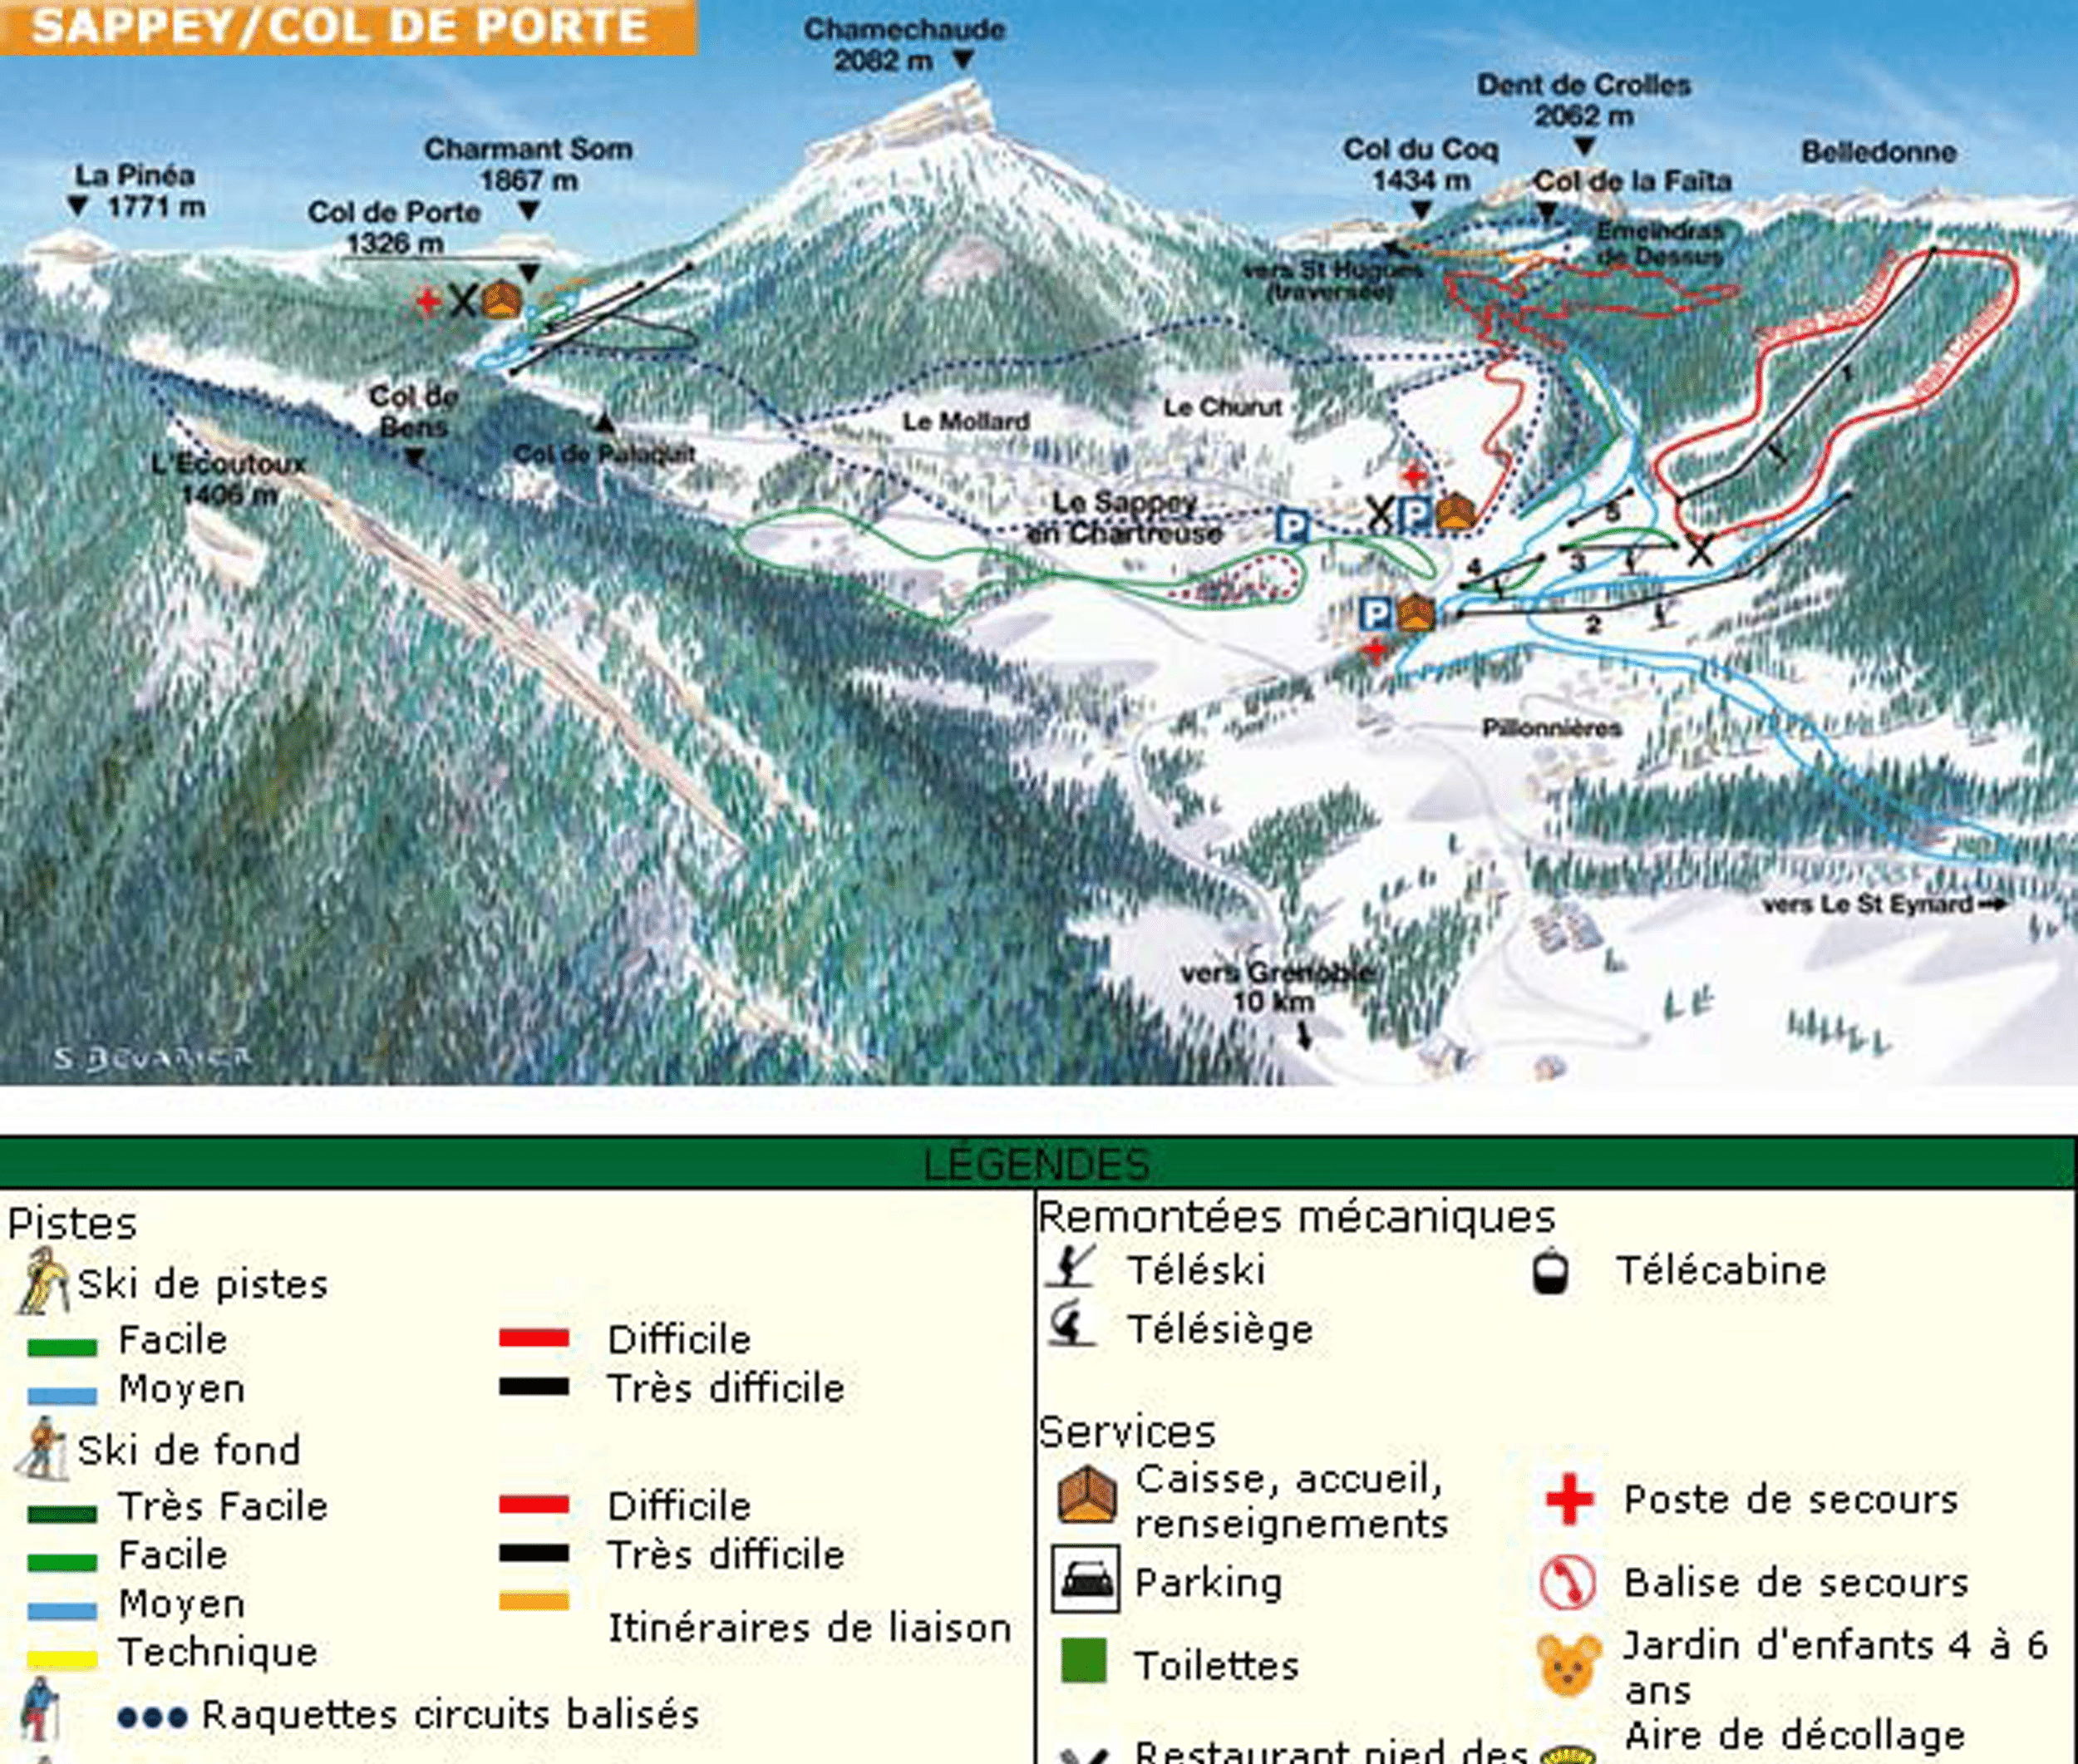 La sappey en chartreuse - Cross country ski trail map